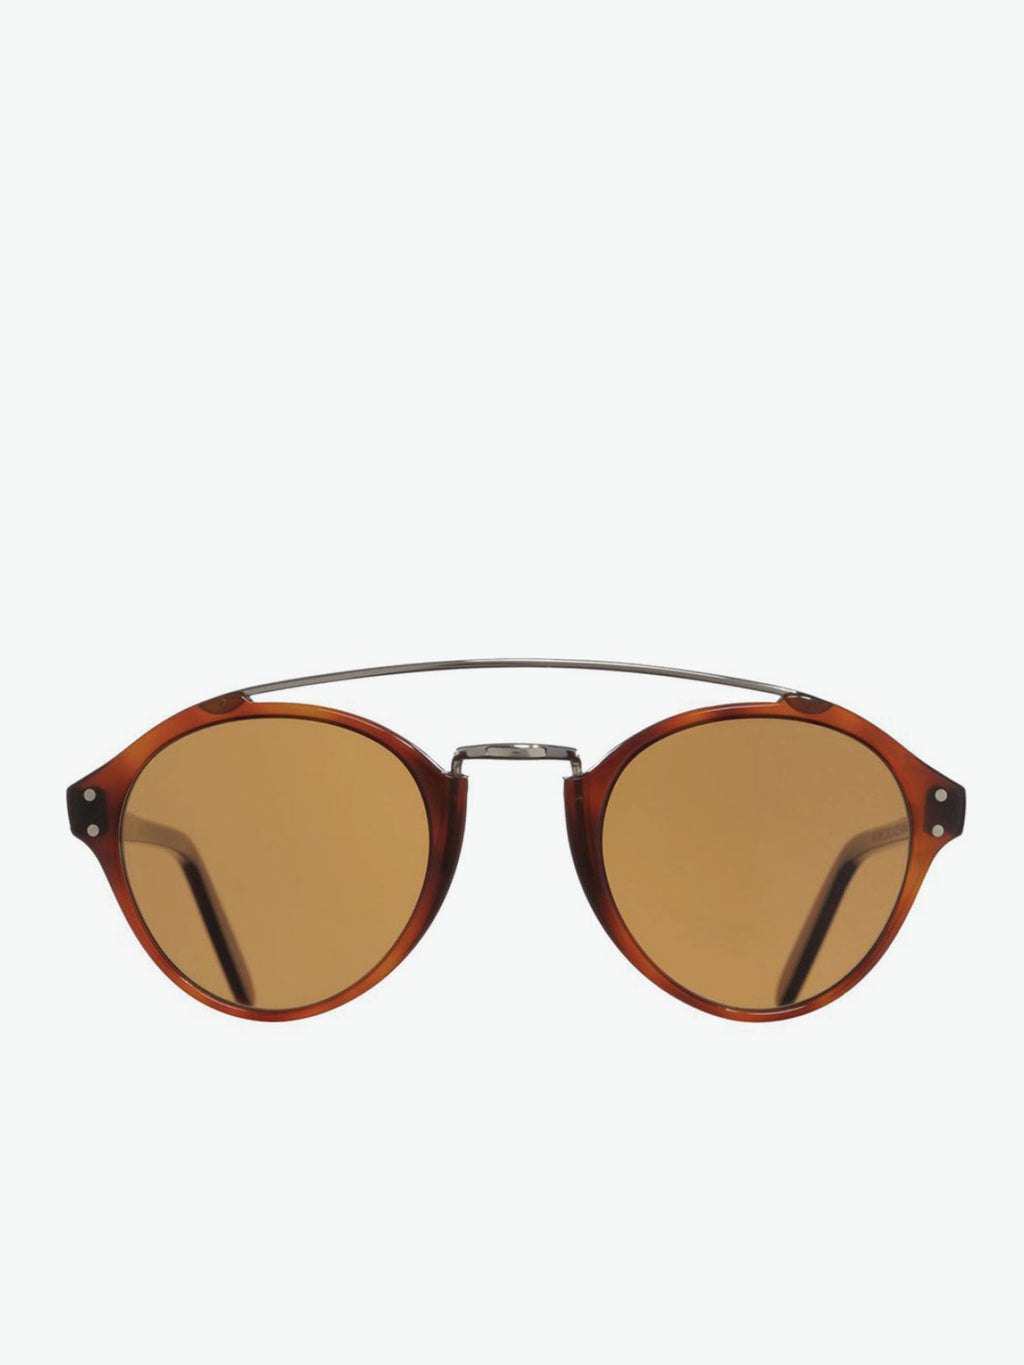 Cutler and Gross Oval-Frame Tortoiseshell Acetate Sunglasses | A